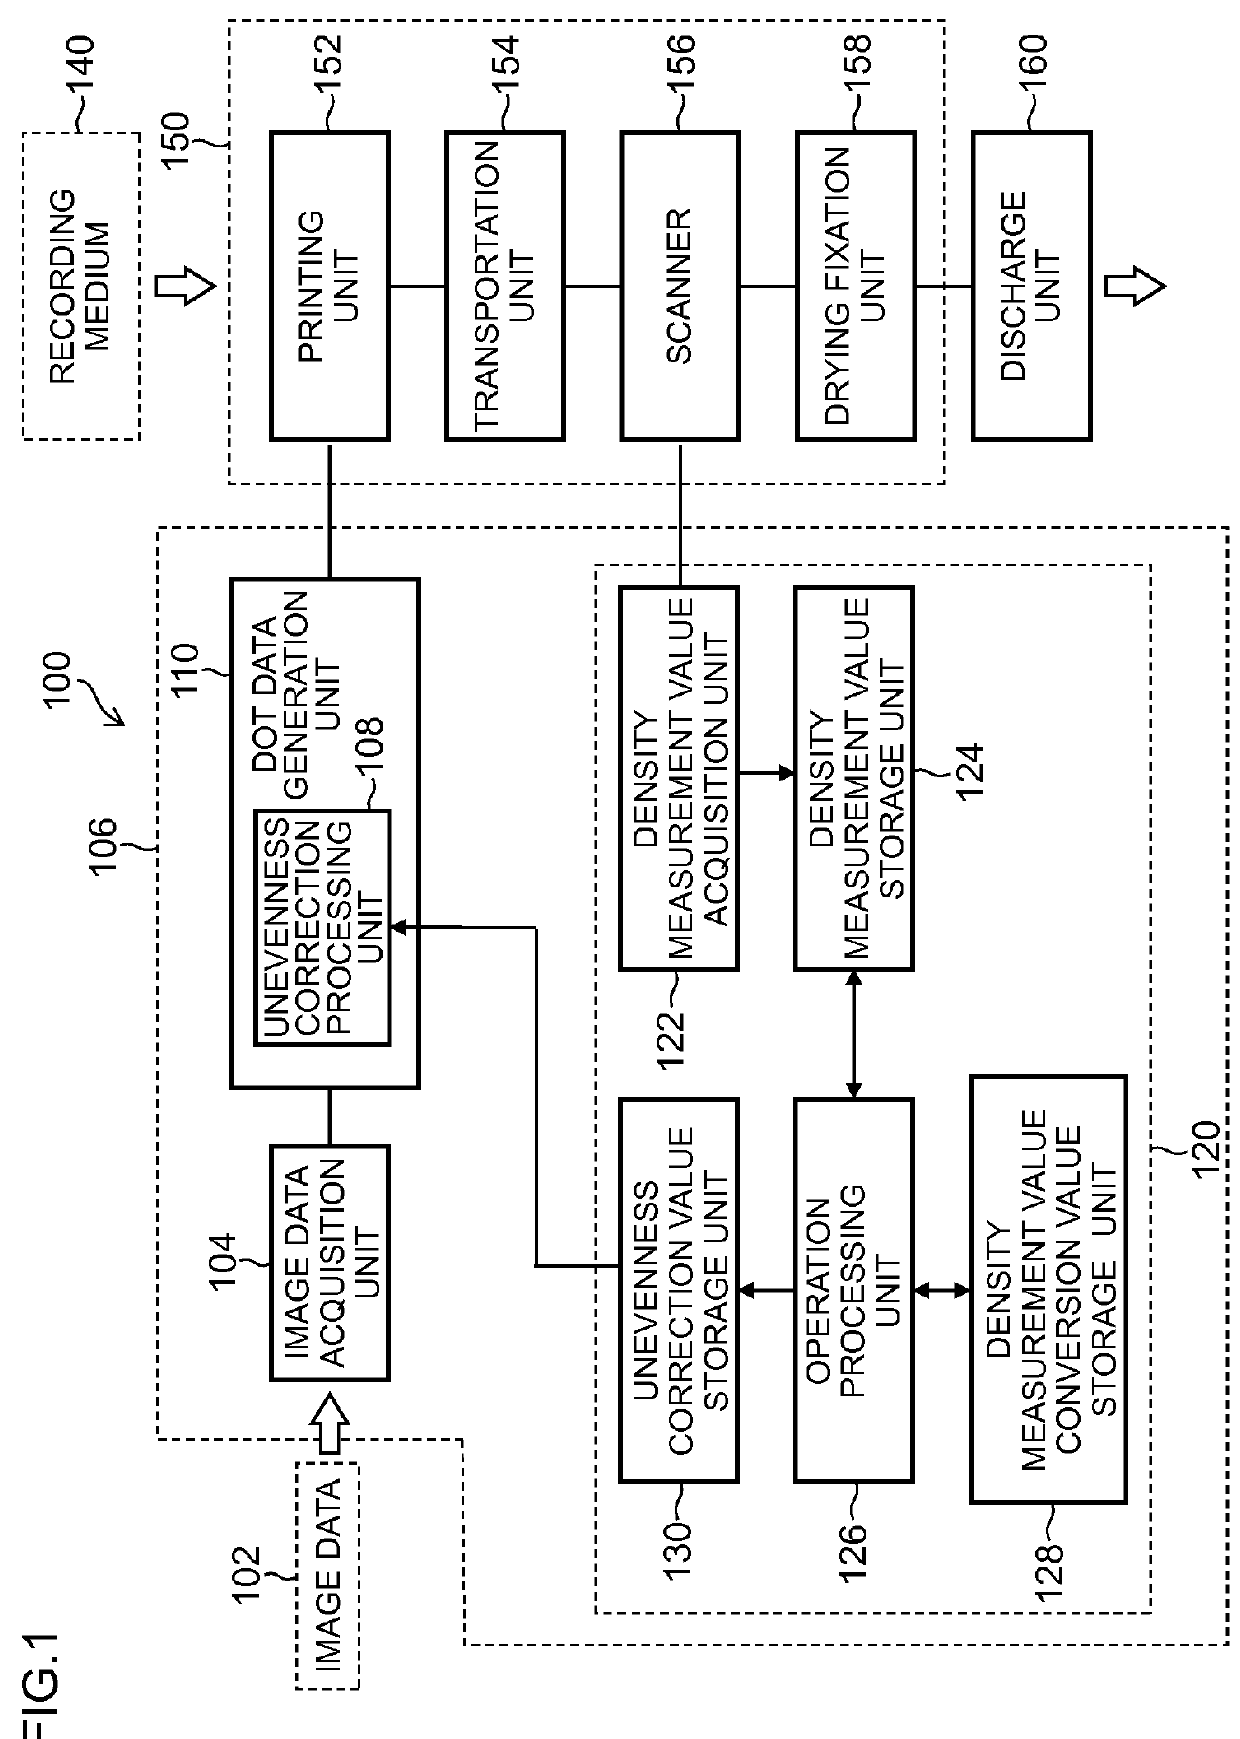 Image processing method and inkjet recording apparatus